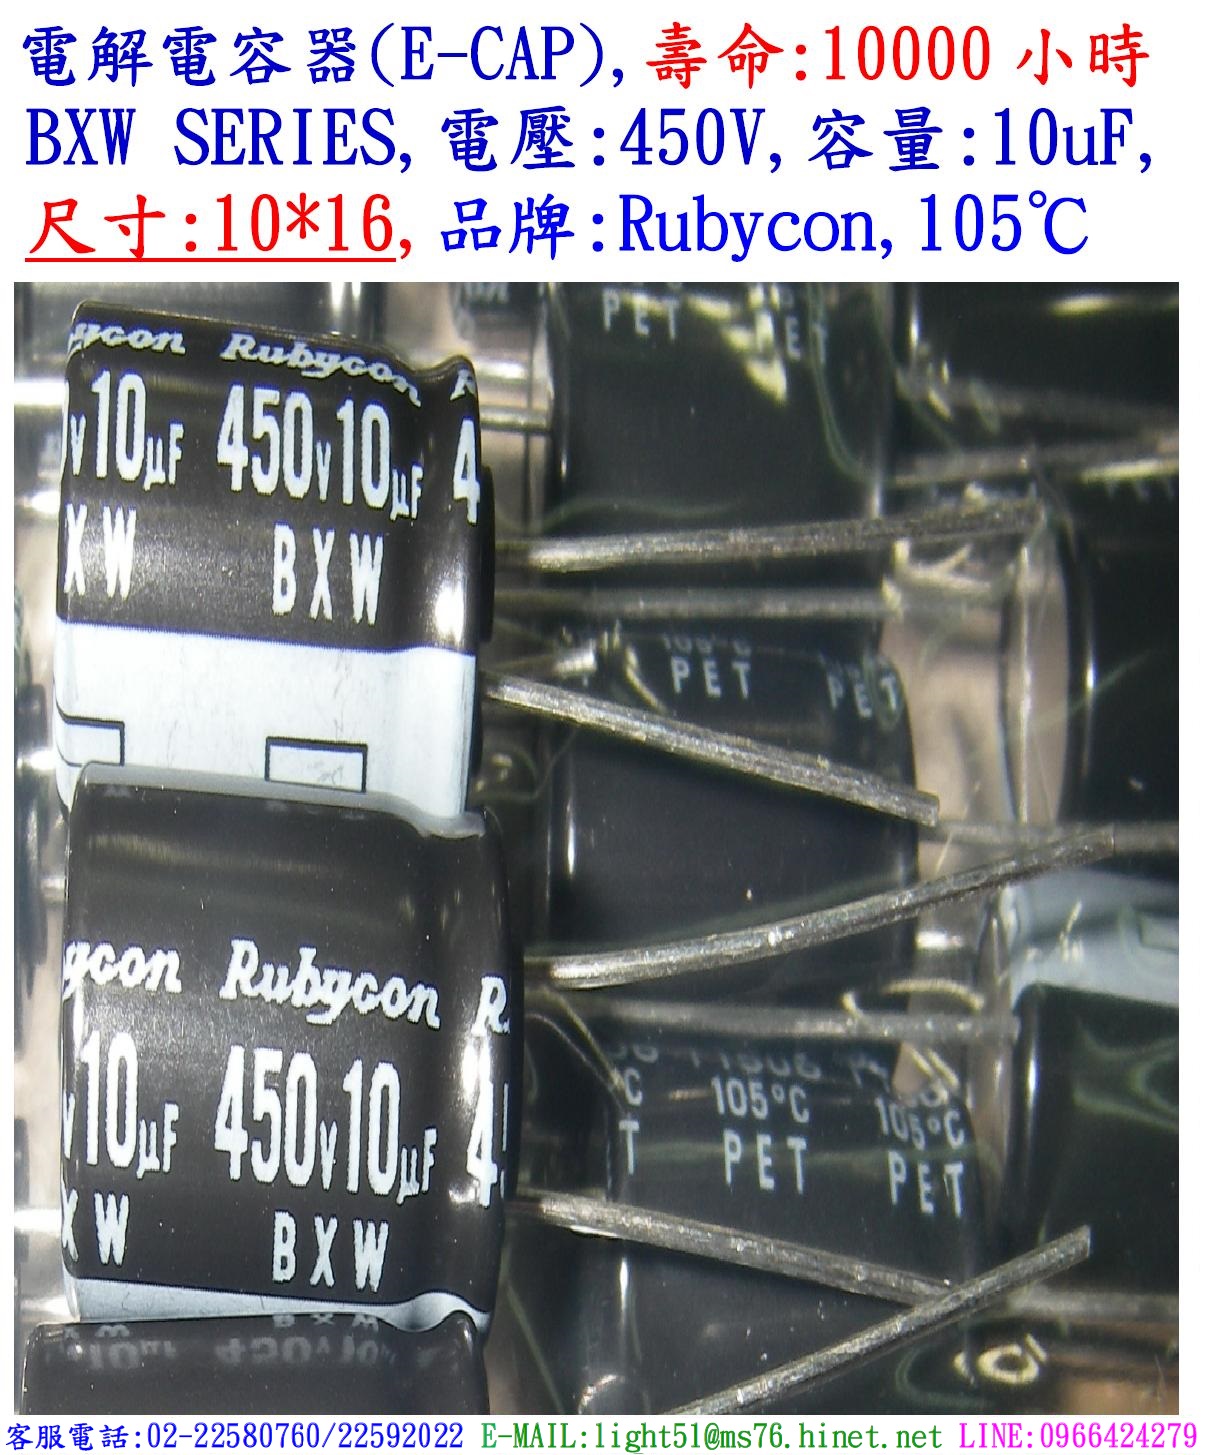 BXW,450V,10uF,尺寸:10*16,電解電容器,壽命:10000小時,Rubycon